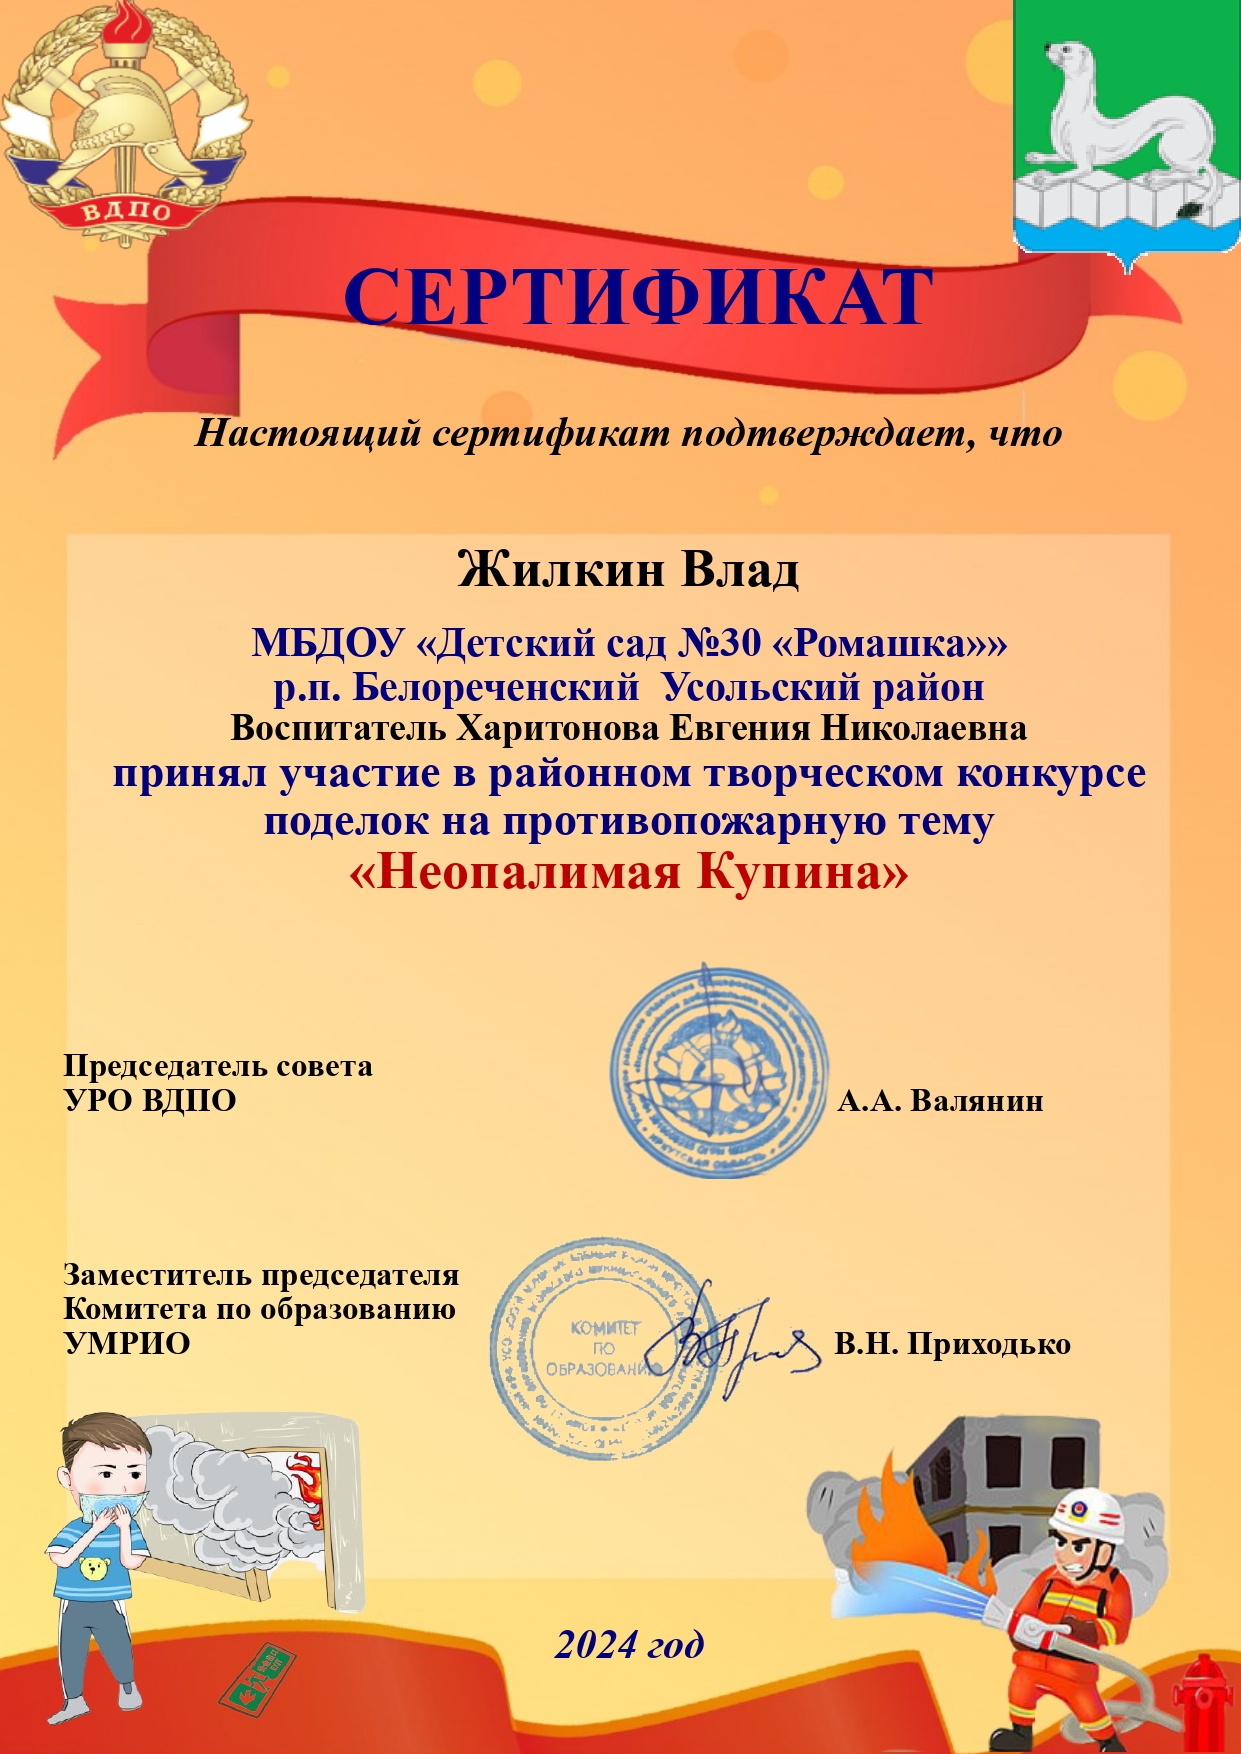 Сертификат поделка Жилкин Влад д. сад 30 page 0001